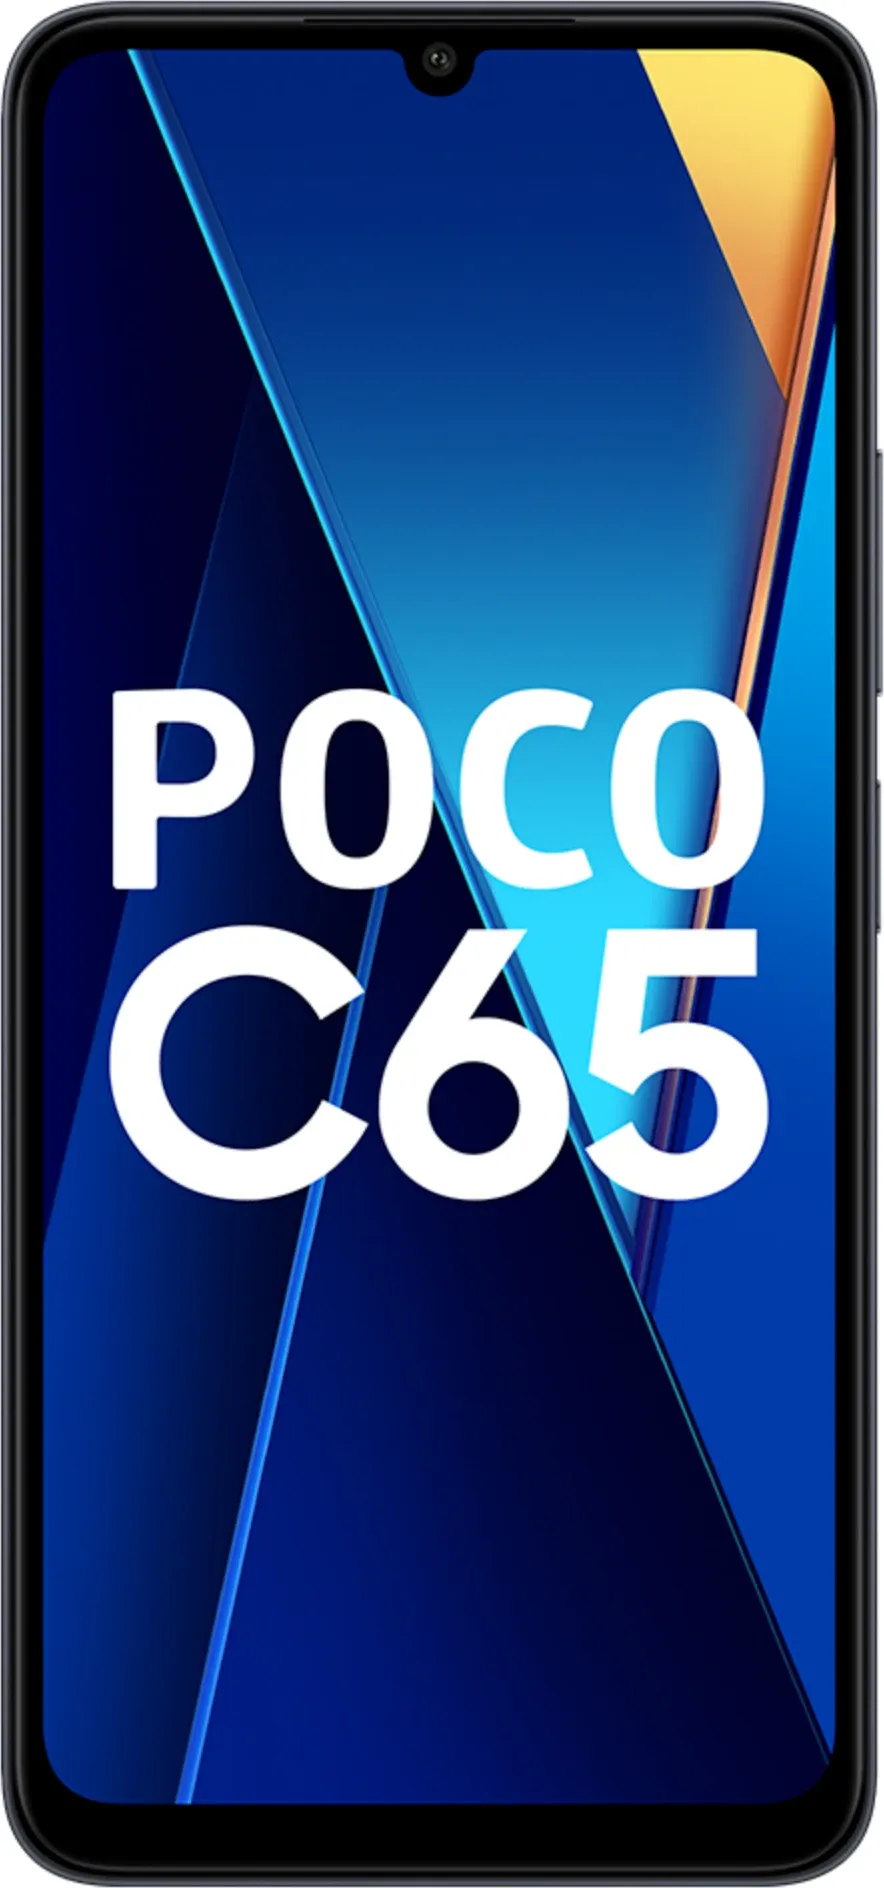 Poco C65 (8GB RAM + 256GB) slide image 0